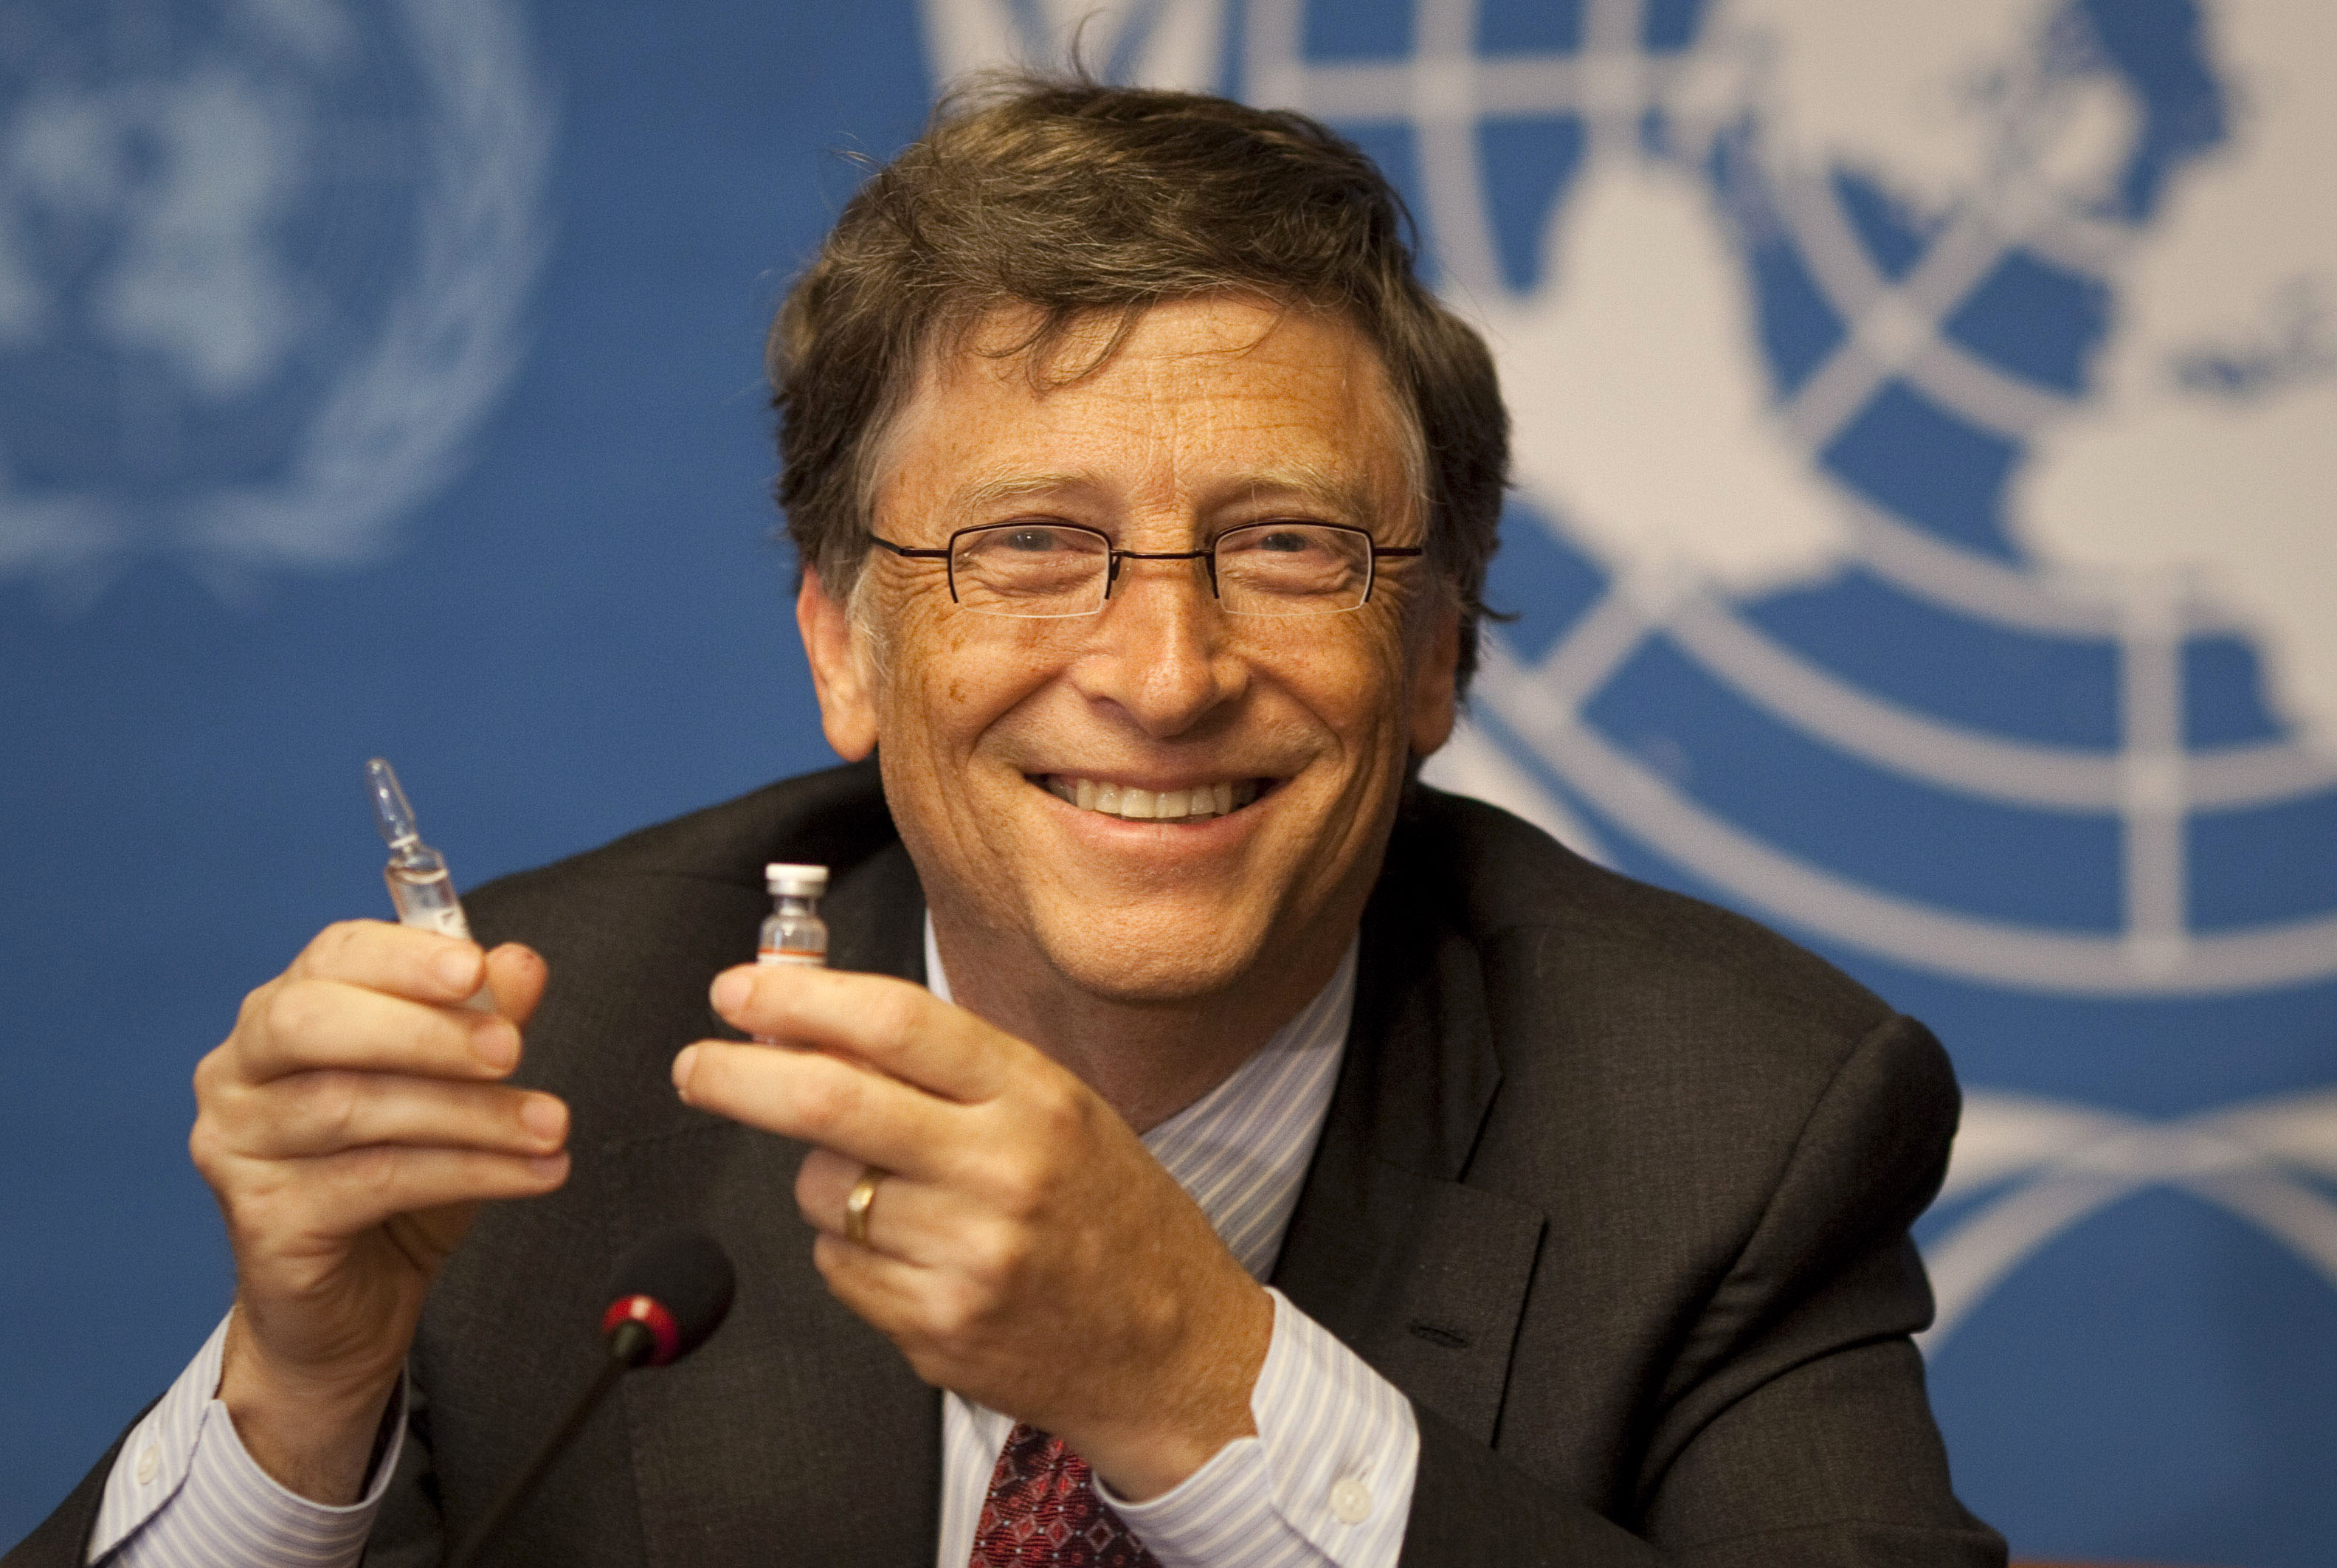 rikaste, Bill Gates, Internet, Forbes, USA, Microsoft